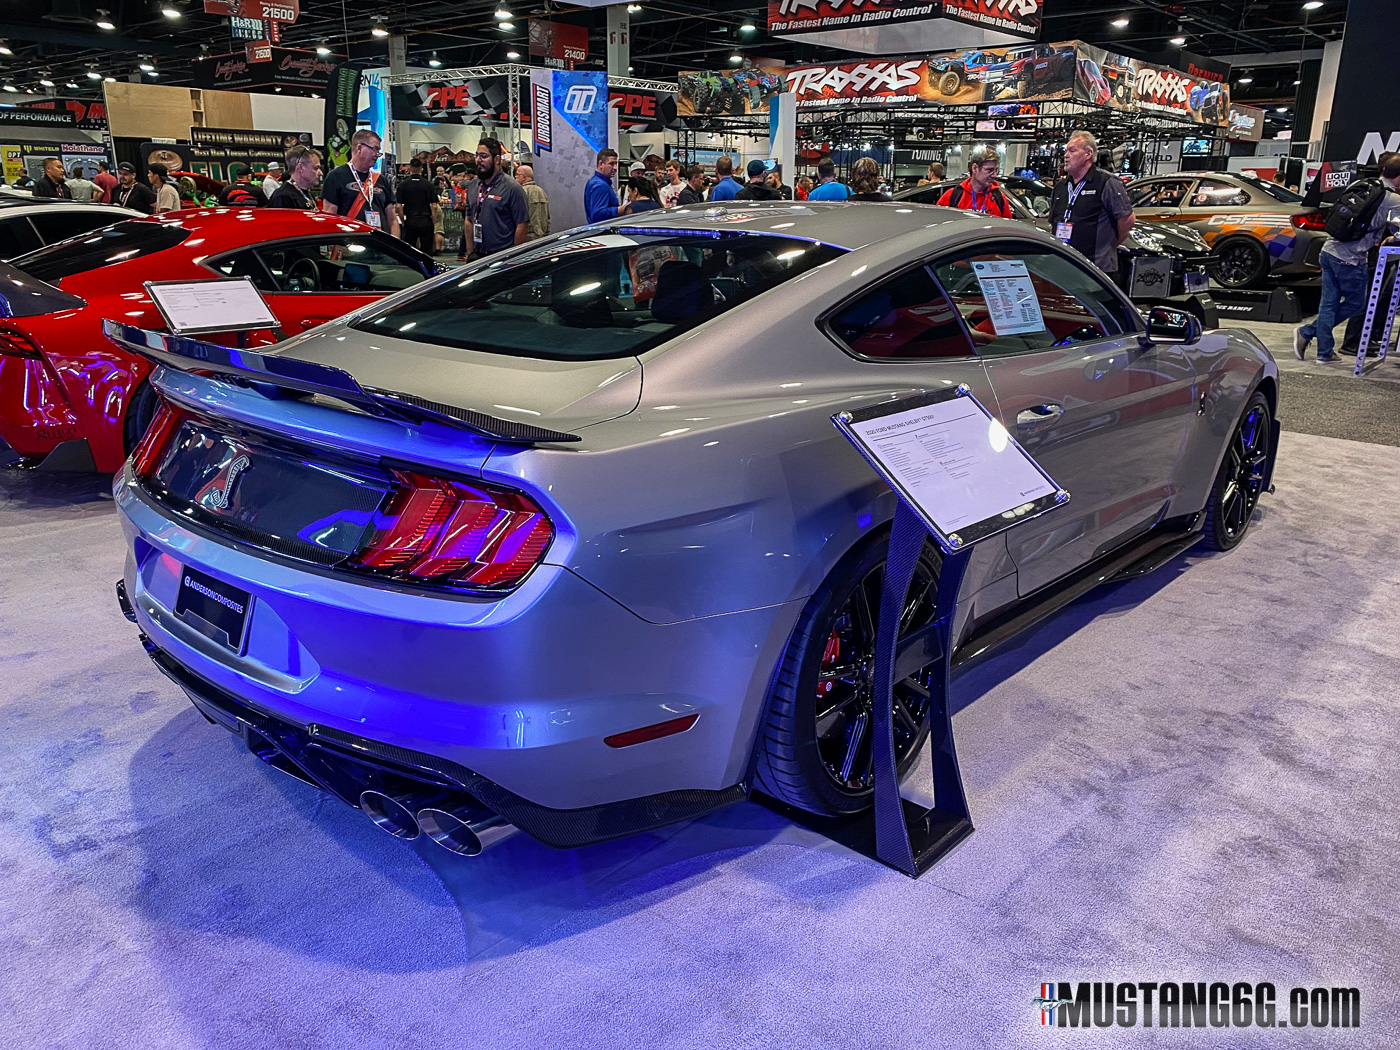 Anderson-Composites-2020-Shelby-GT500-Build-SEMA-2019-11.jpg